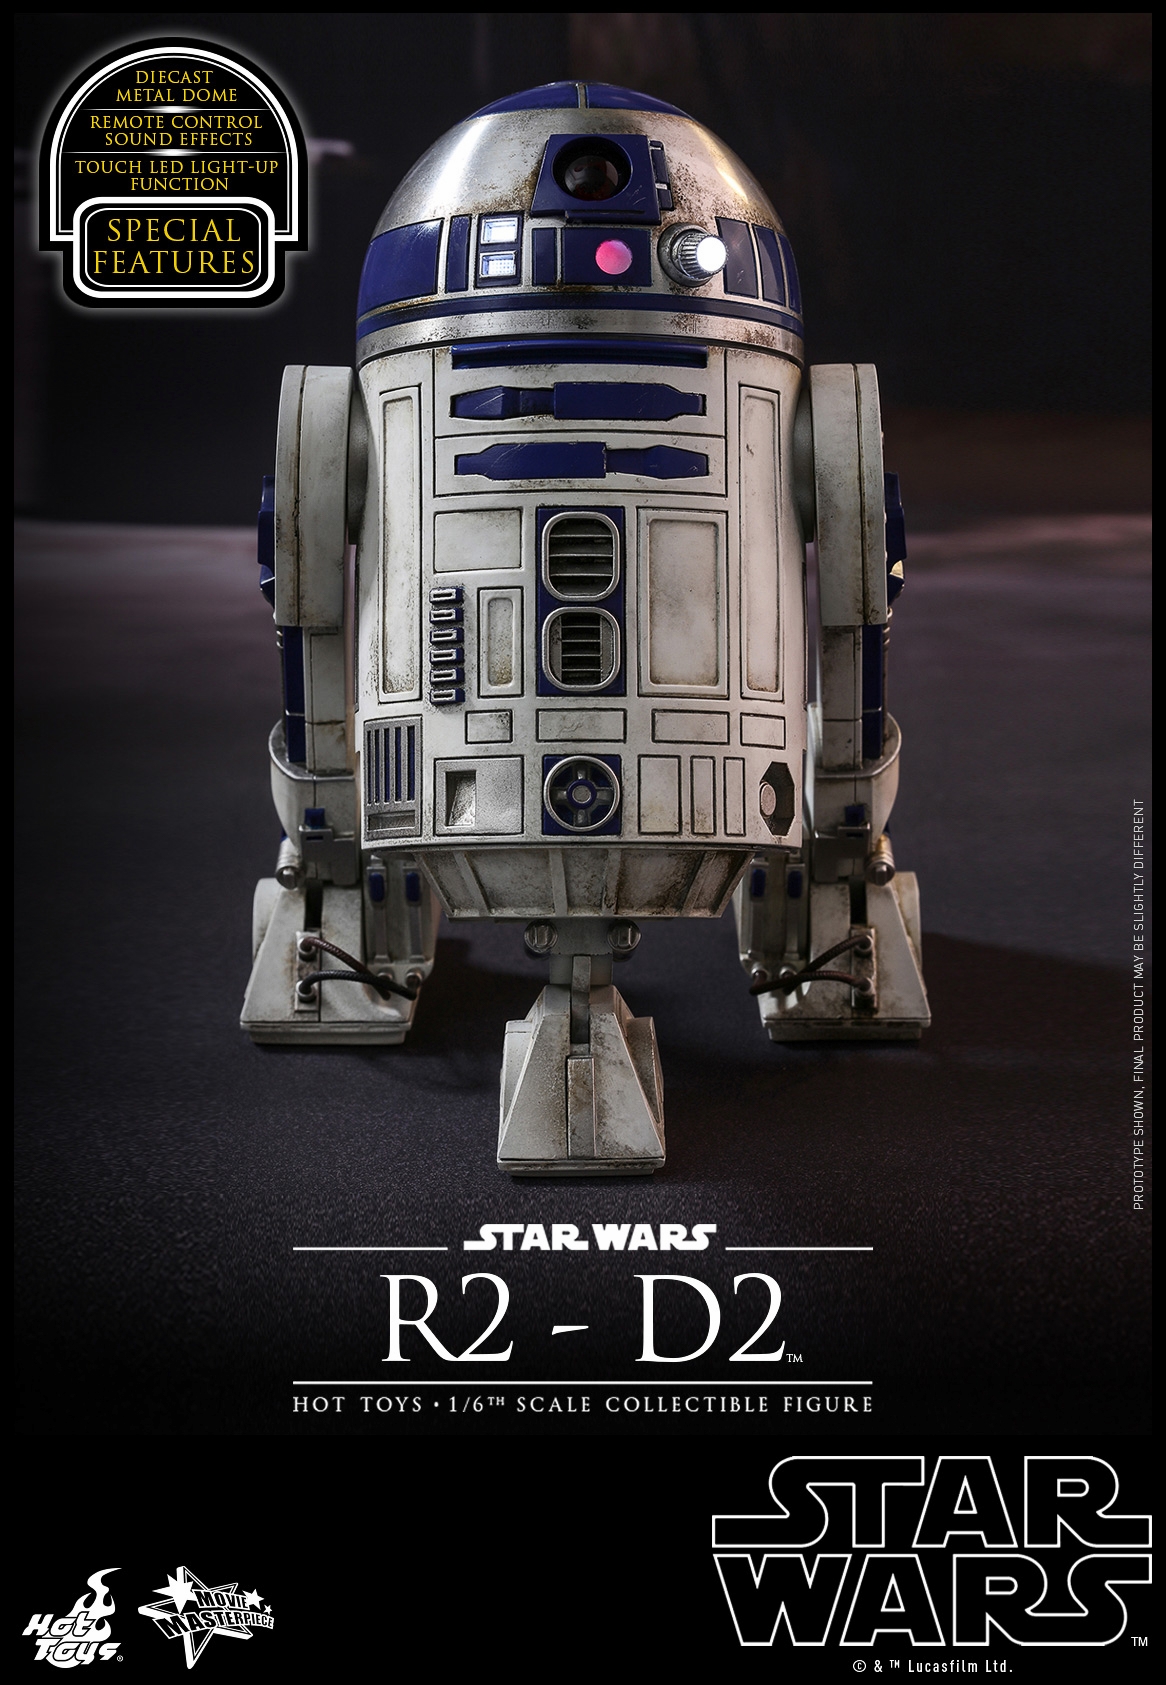 Hot-Toys-MMS408-Star-Wars-The-Force-Awakens-R2-D2-002.jpg